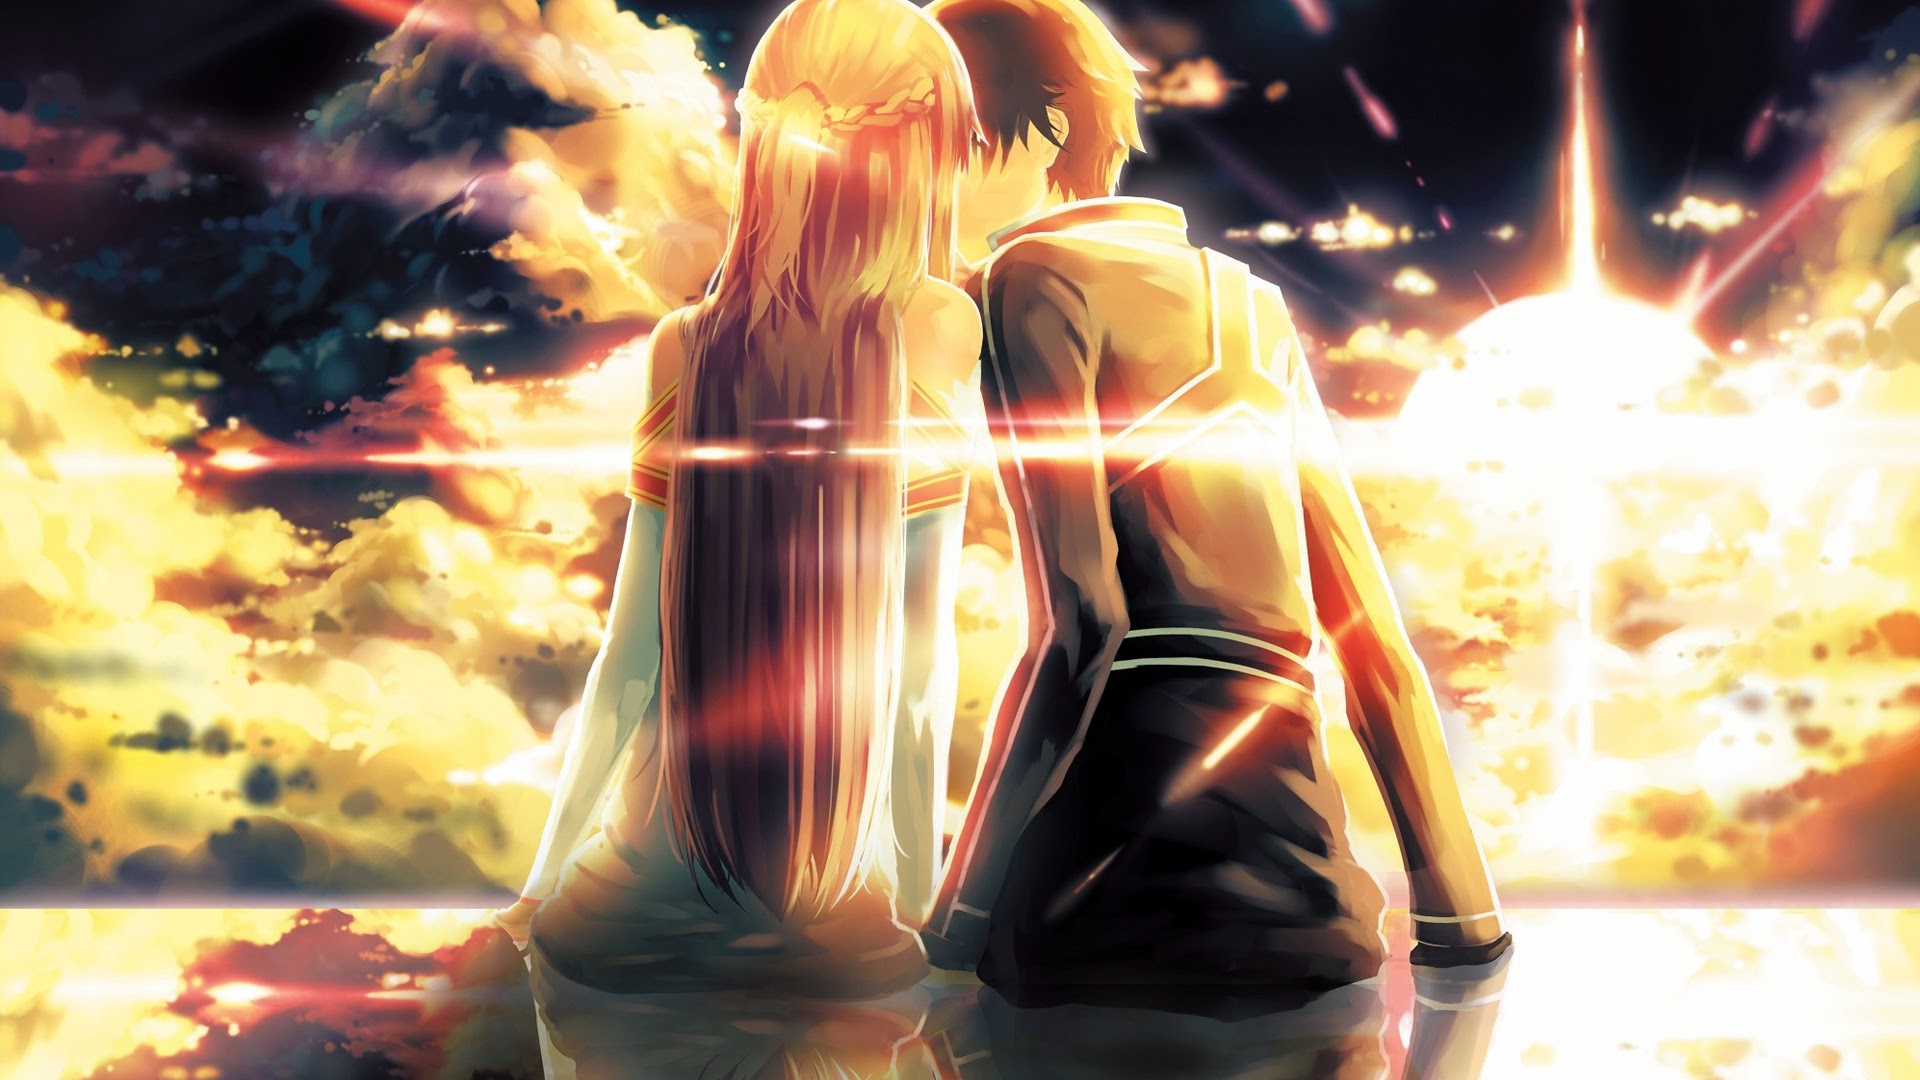 asuna kirito kiss sword art online sunset anime hd wallpaper